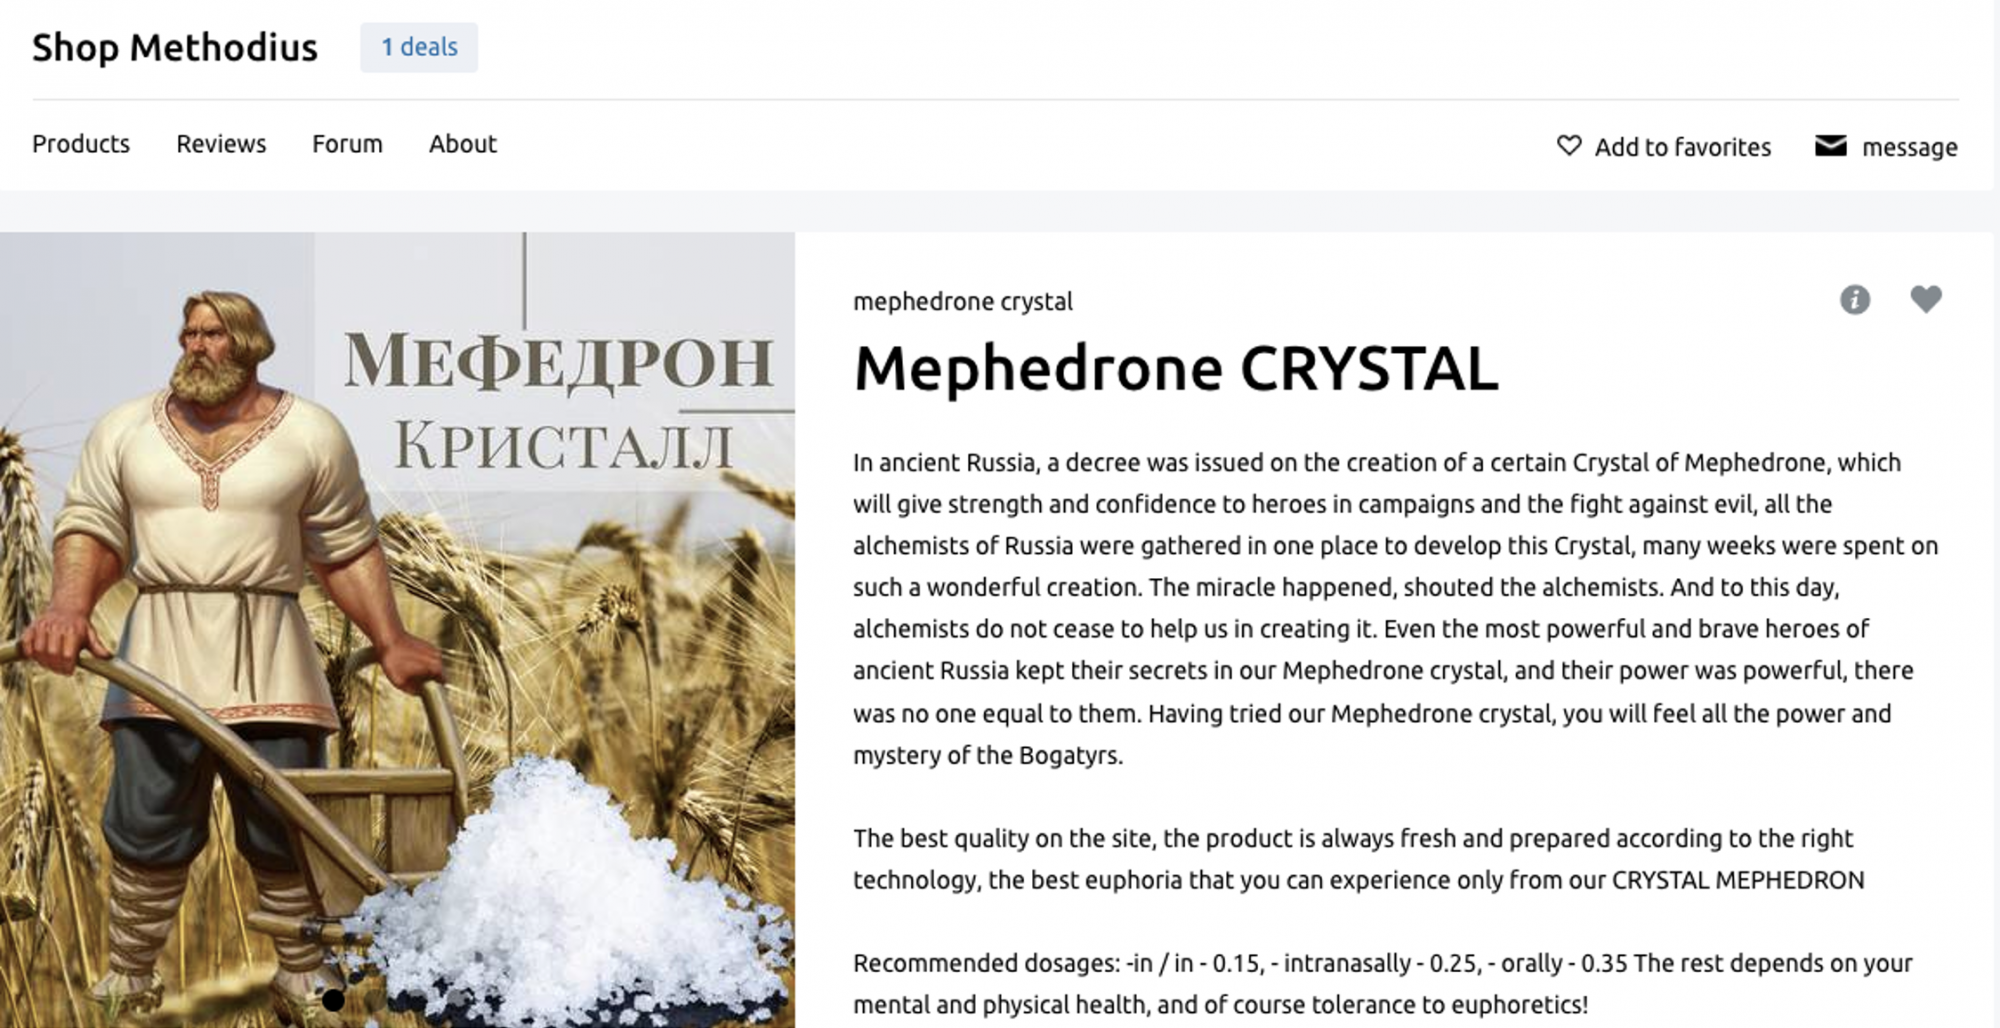 mephedrone crystal drug shop online deep dark web